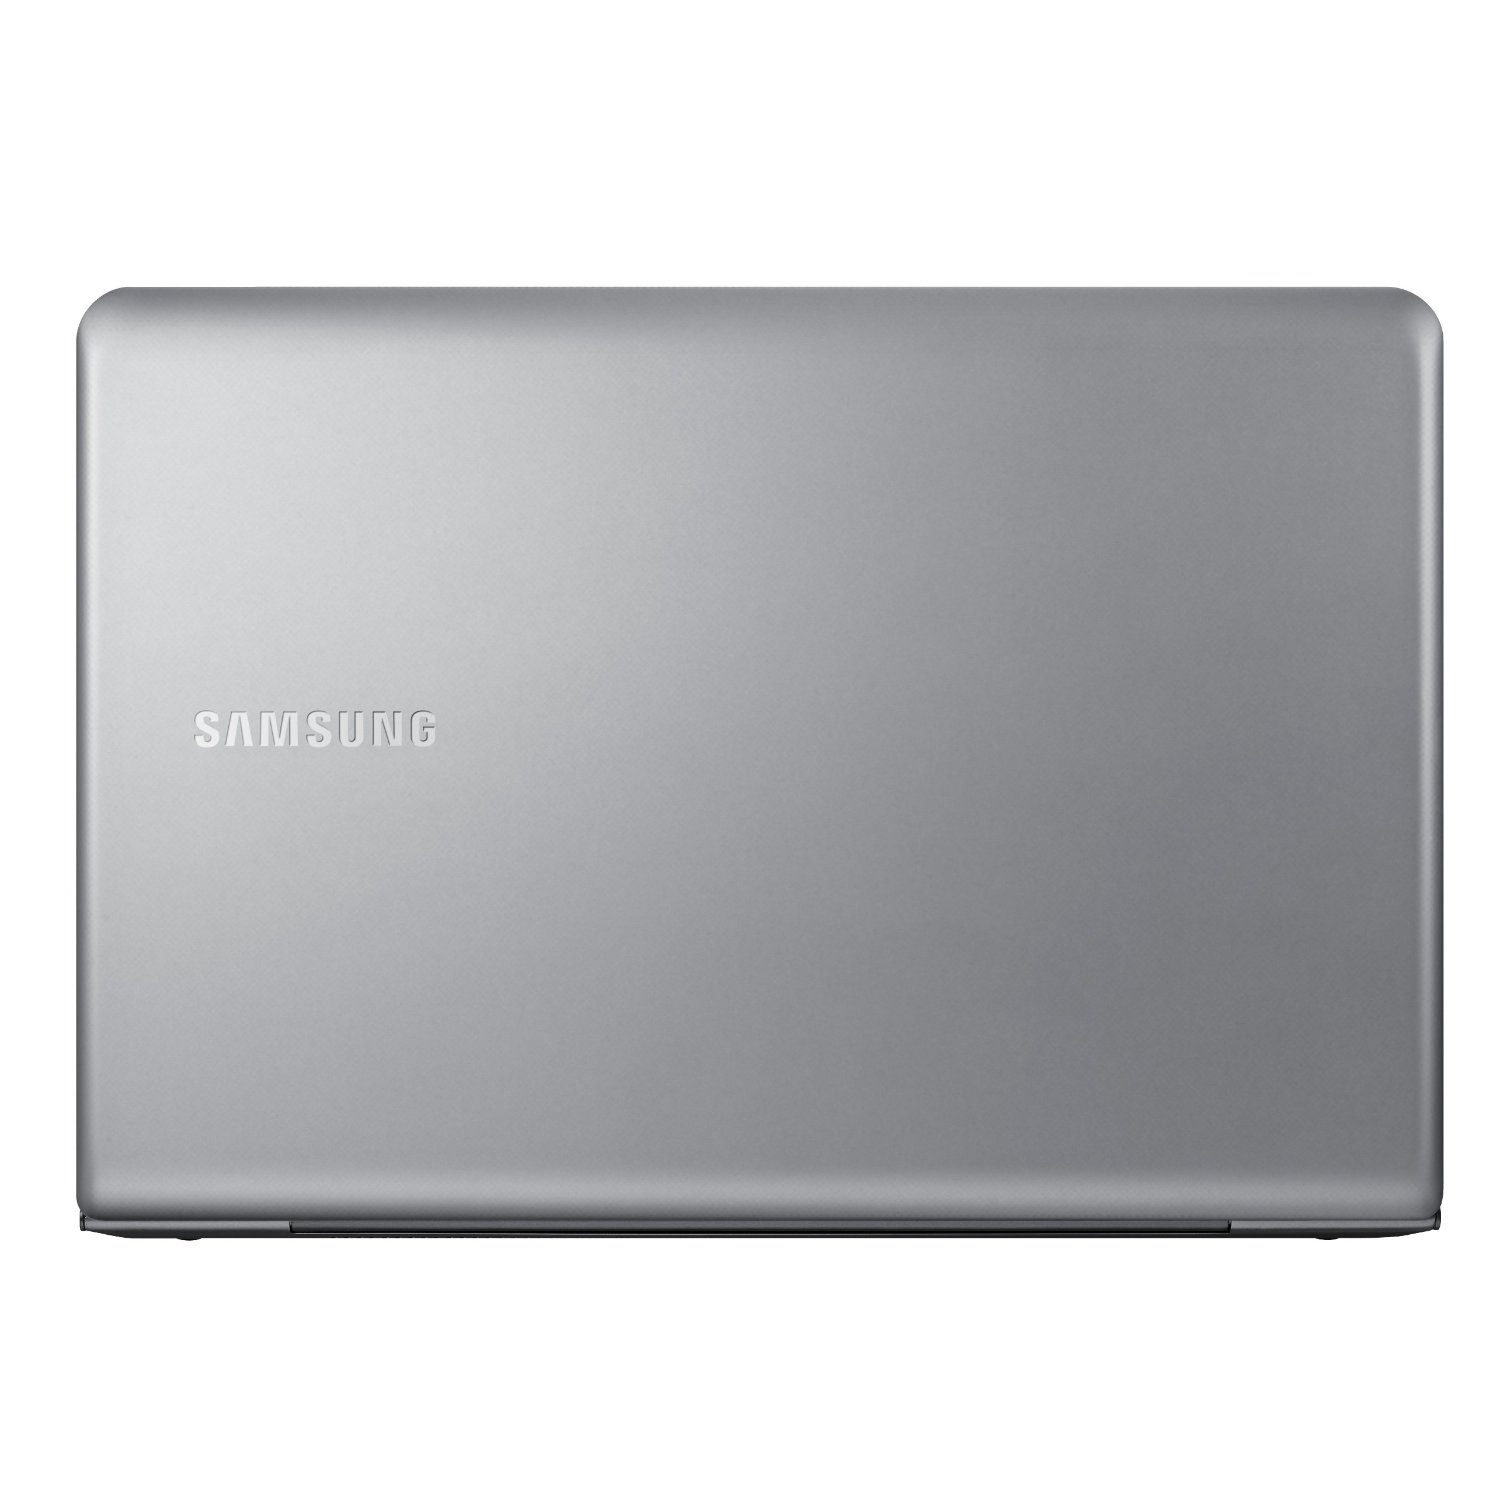 Samsung 535U3C-A01US